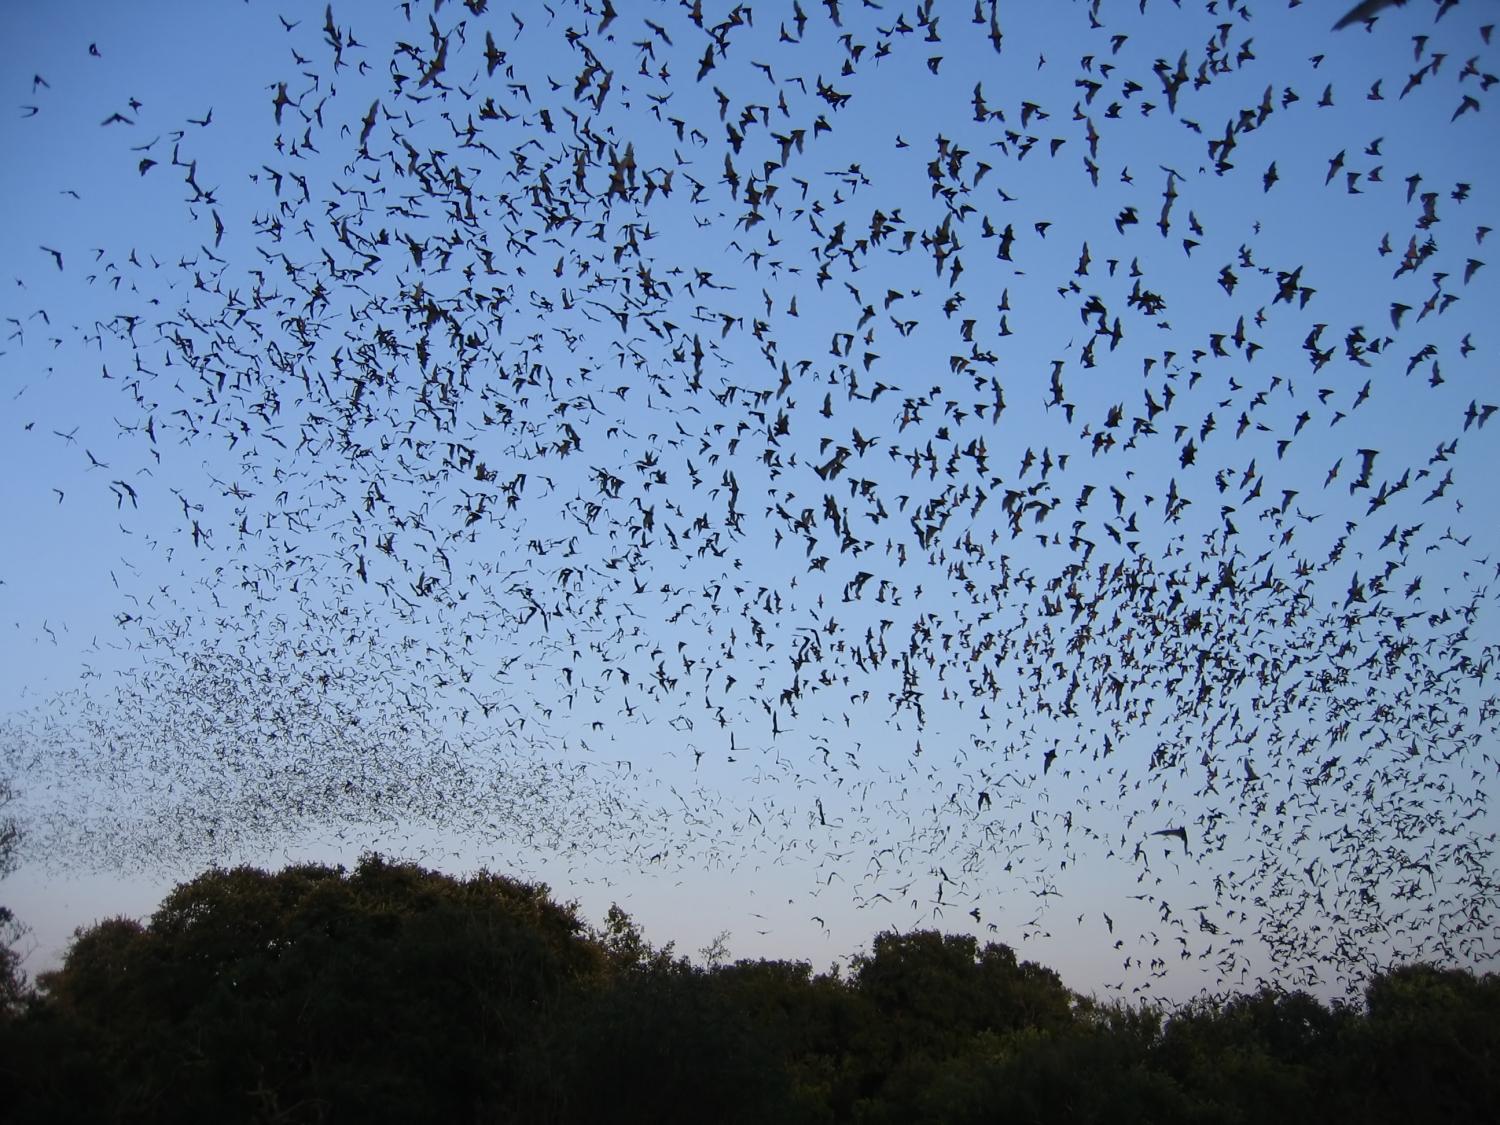 Bat flock